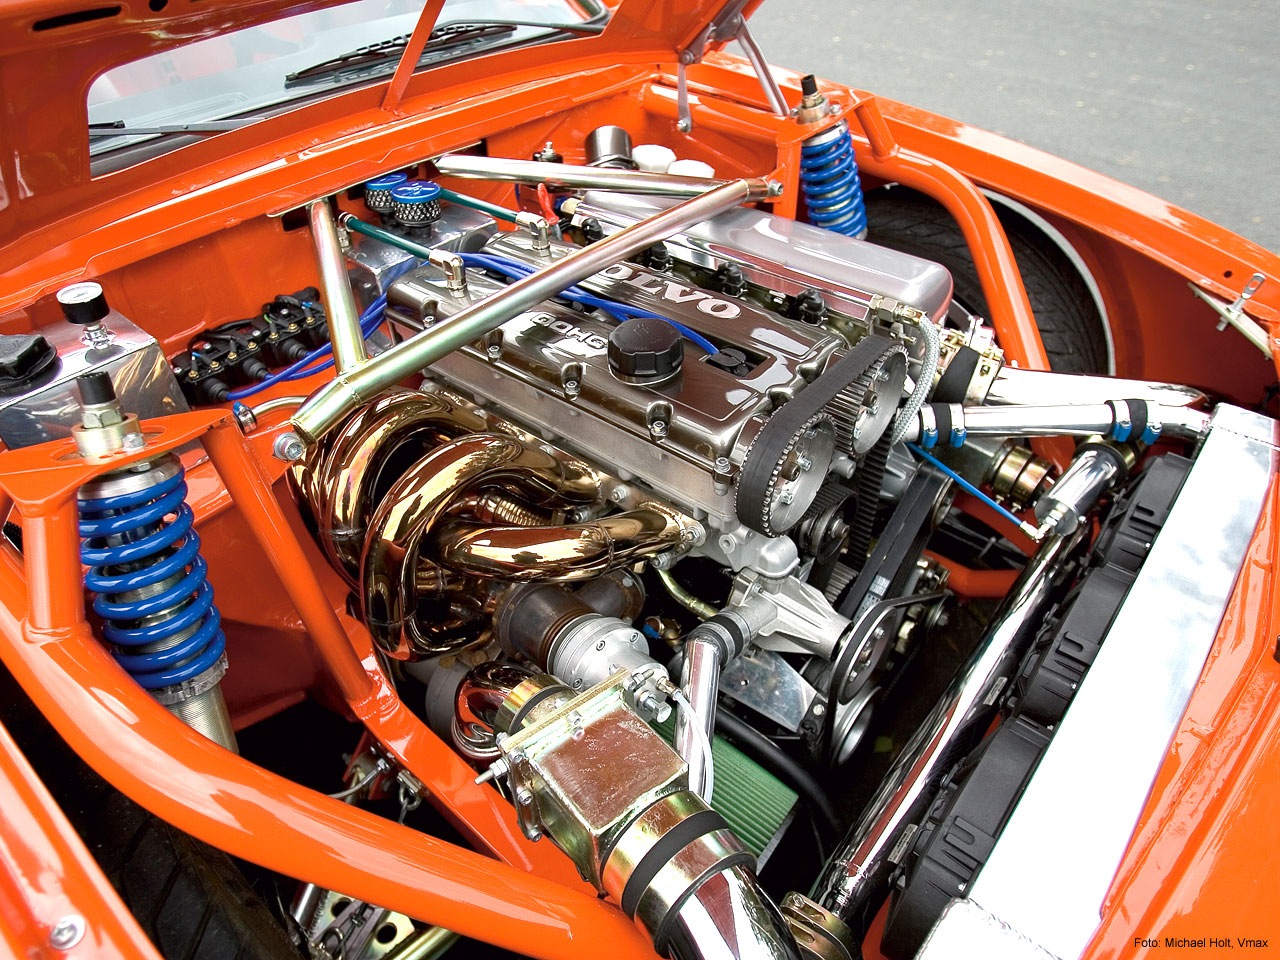 Двигатель на автомобиле является. Opel Manta a engine. Жигули турбо 8v. ВАЗ 2106 турбо. Турбина на ВАЗ 2106.